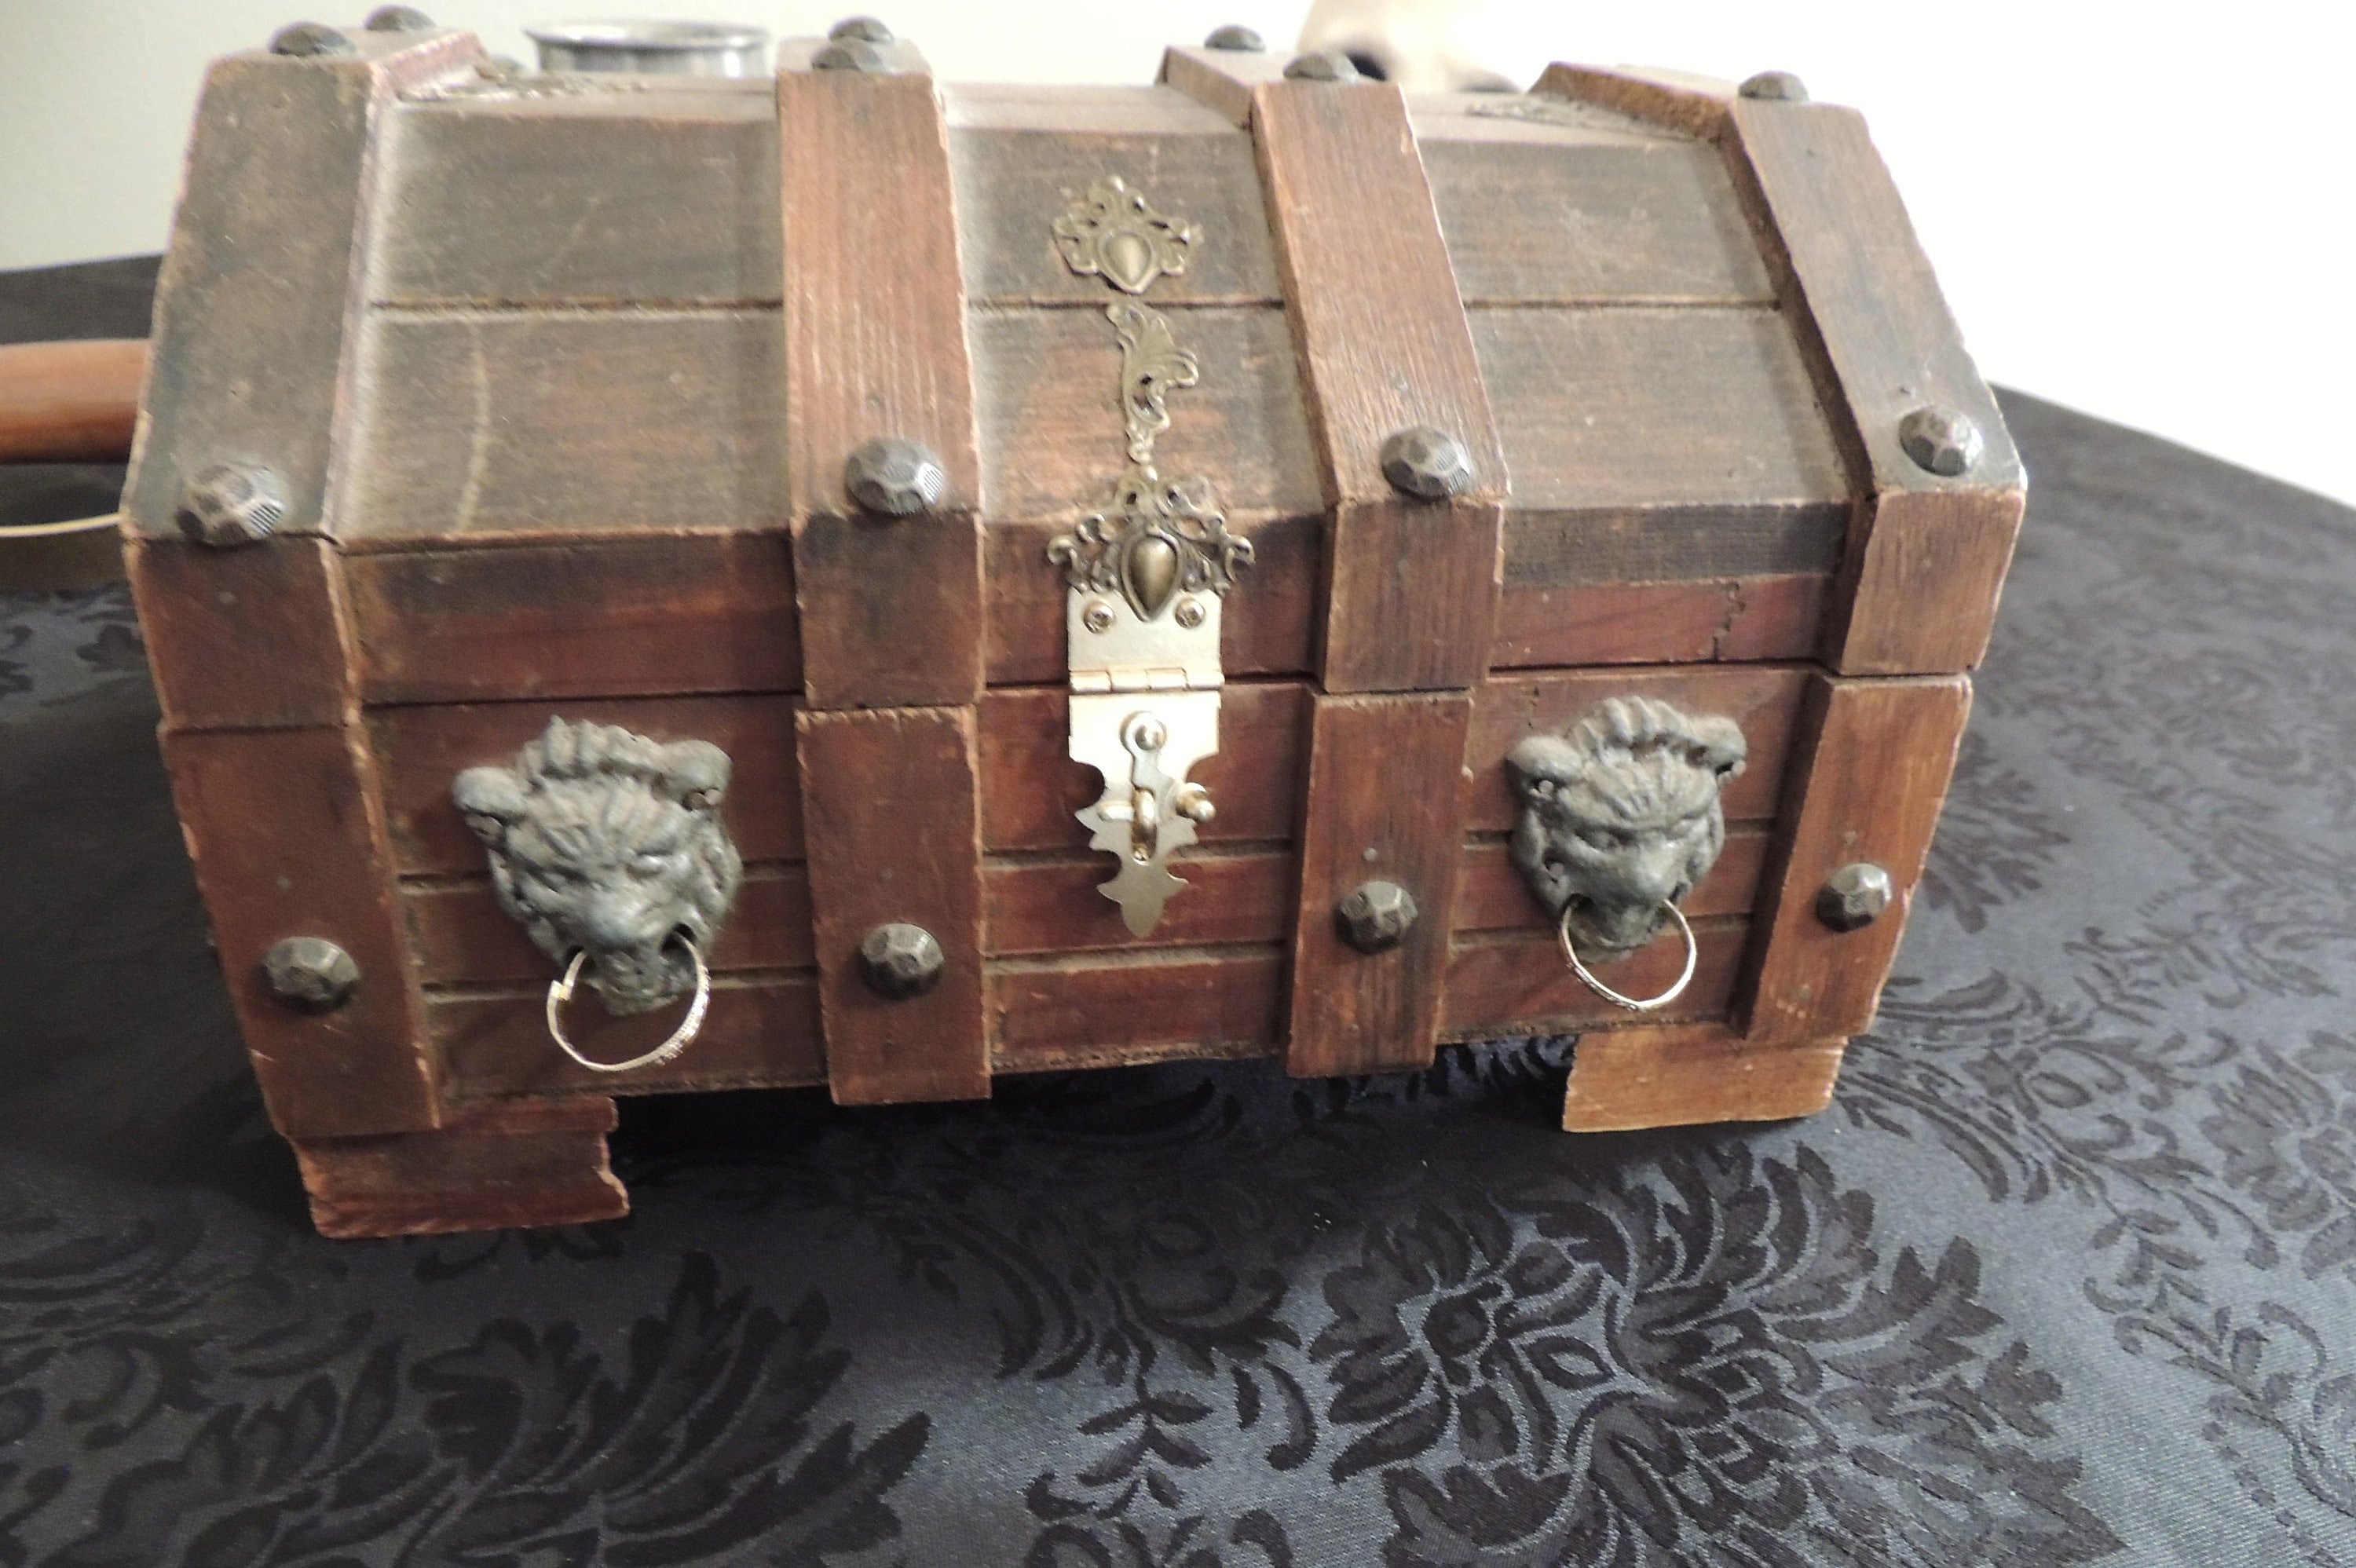 Pssopp Wood Treasure Chest Keepsake Jewelry Box Treasure Box Wooden Box for  Jewelry Storage,Cards Co…See more Pssopp Wood Treasure Chest Keepsake